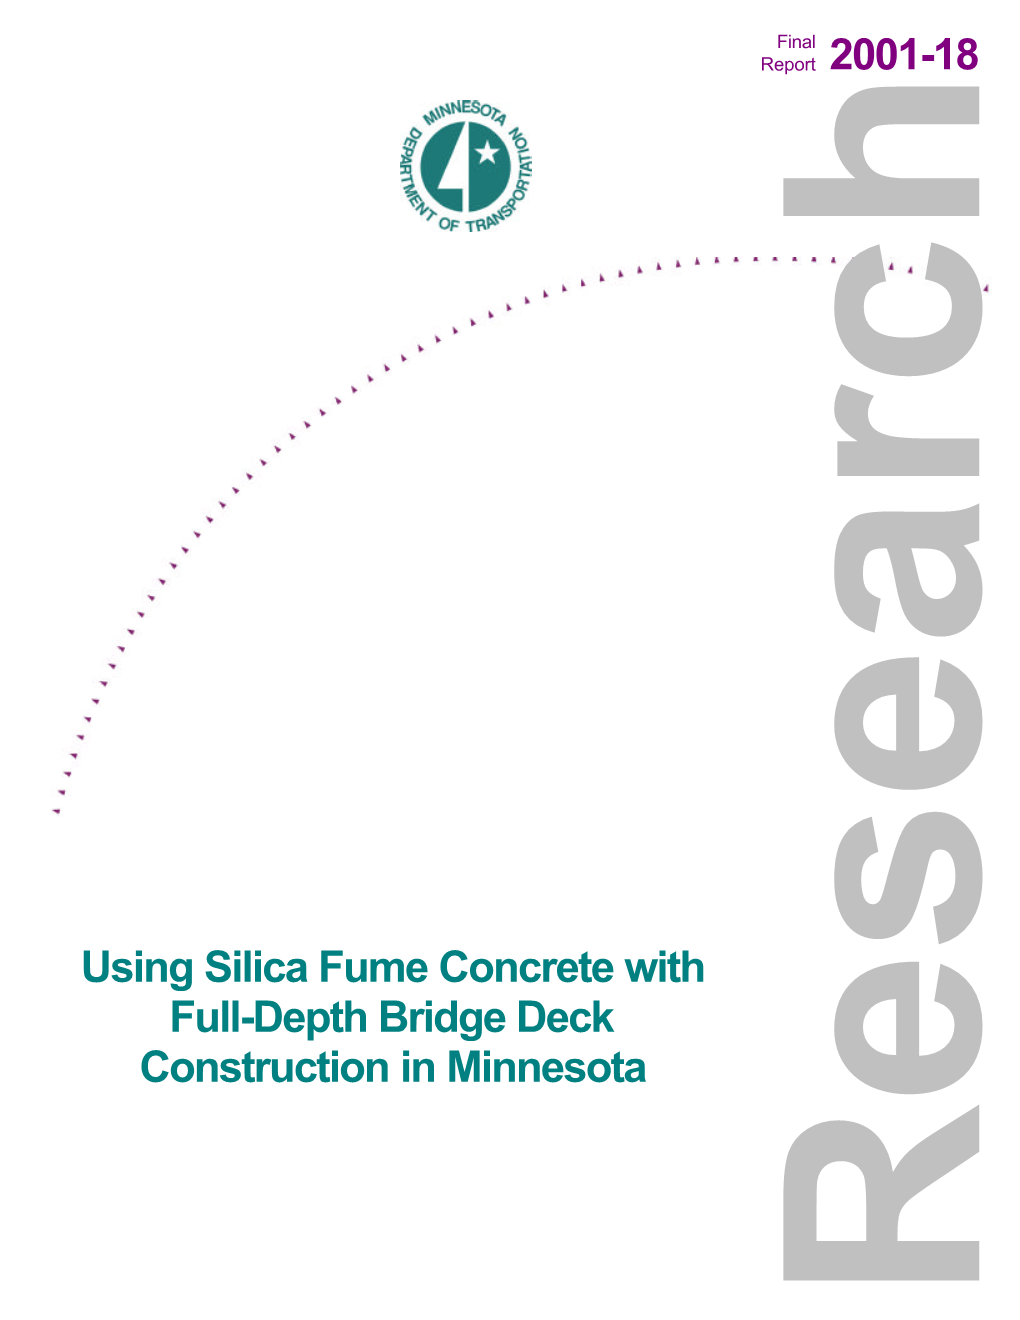 The Use of Silica Fume Concrete for Full-Depth Bridge Deck Construction